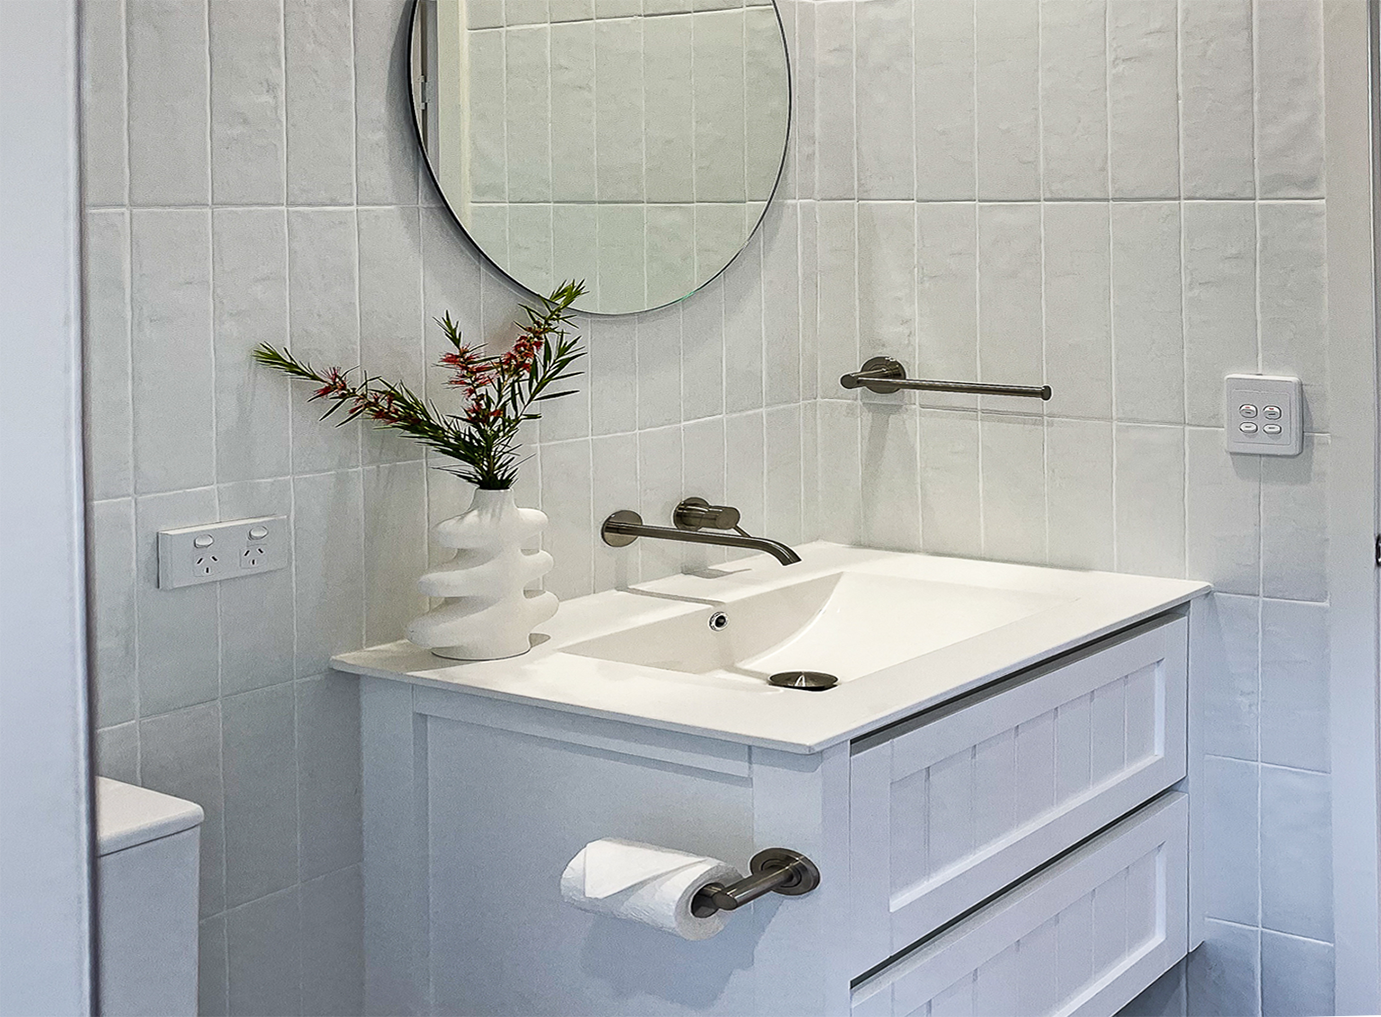 Bright white bathroom vanity with large round mirror